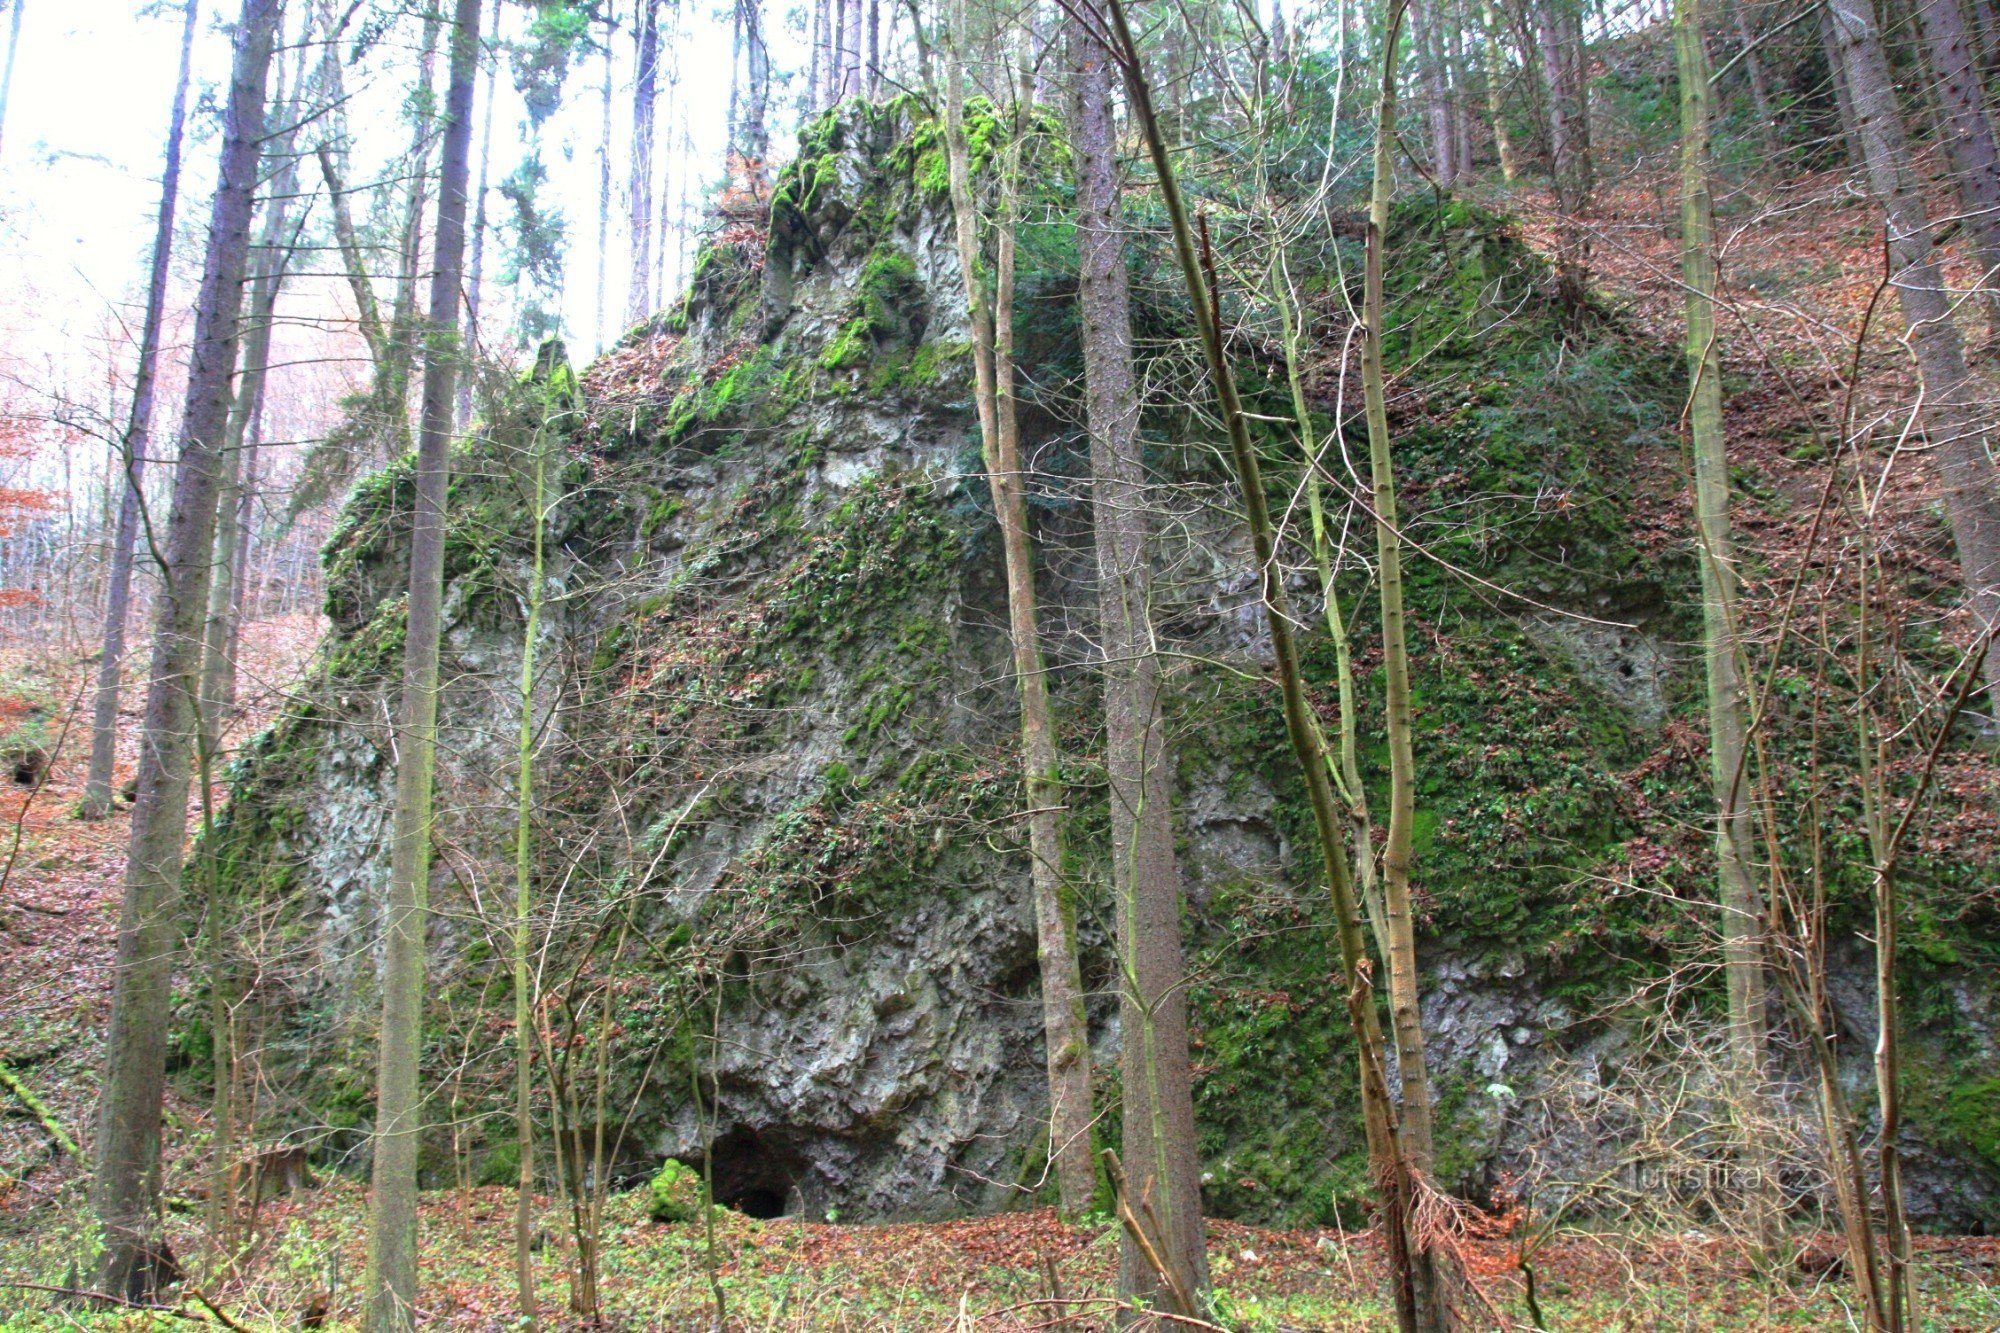 General view of Lucerka rock